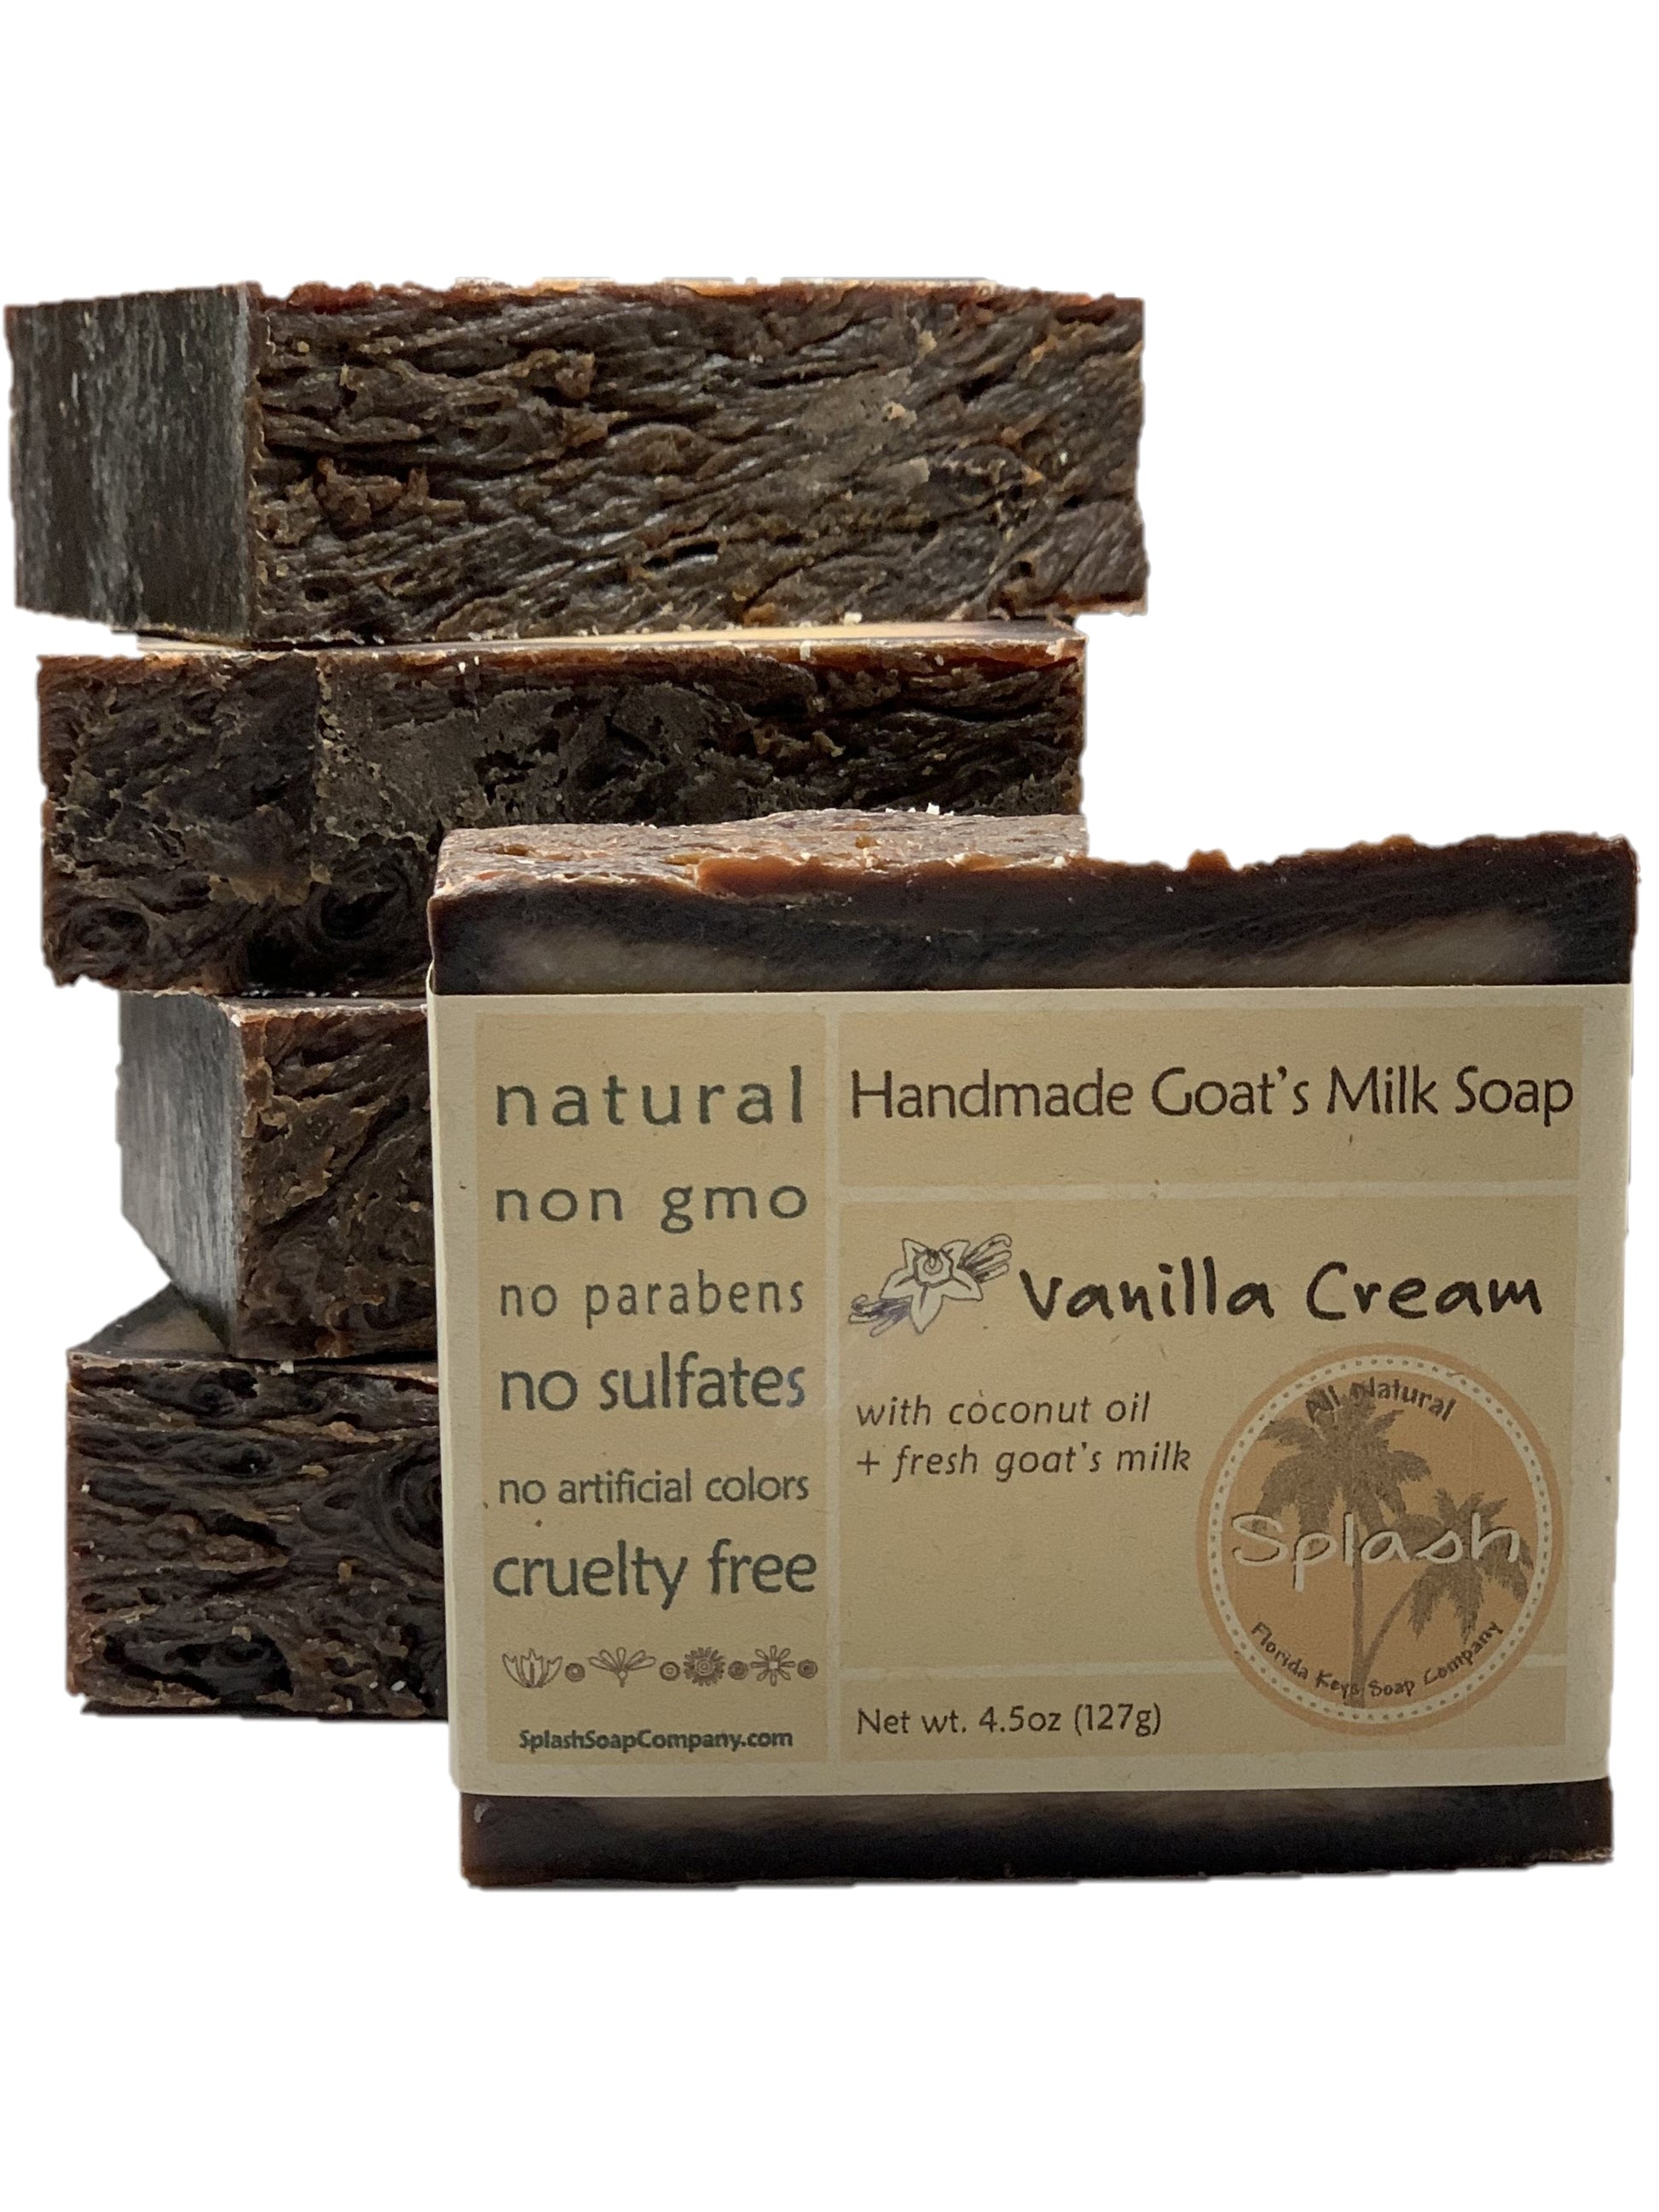 Vanilla Cream - Splash Soap Company